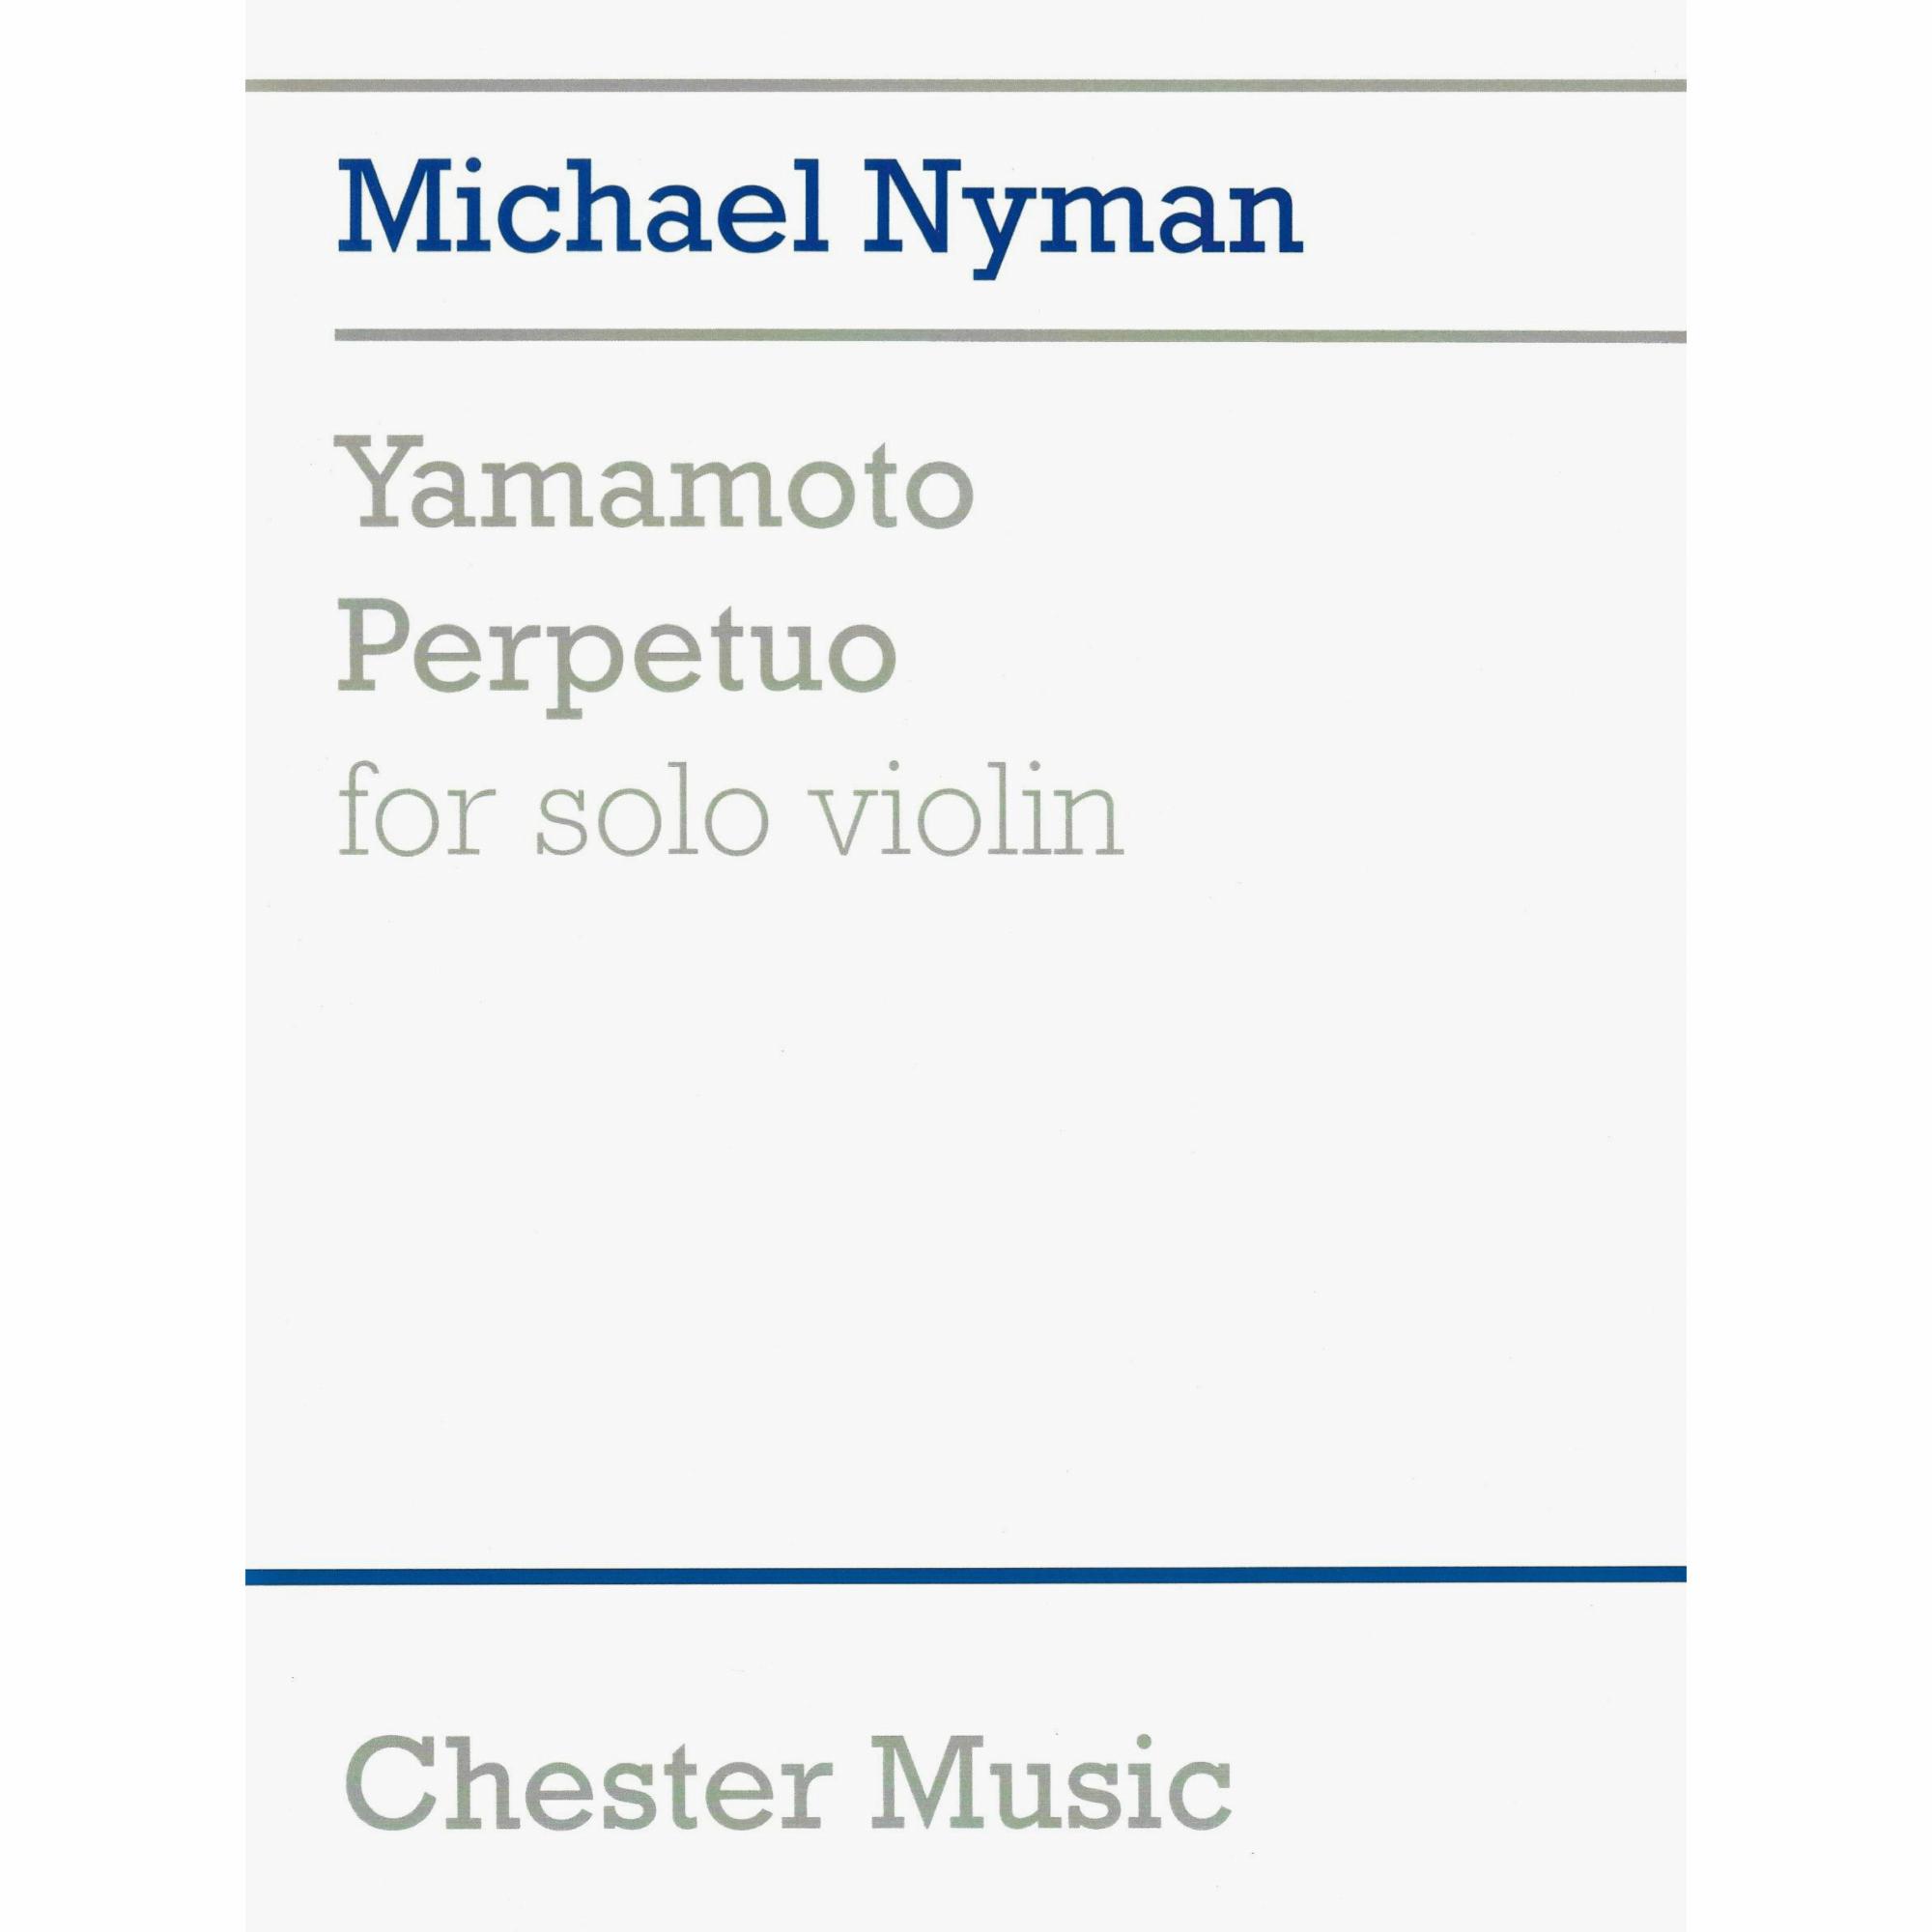 Nyman -- Yamamoto Perpetuo for Solo Violin